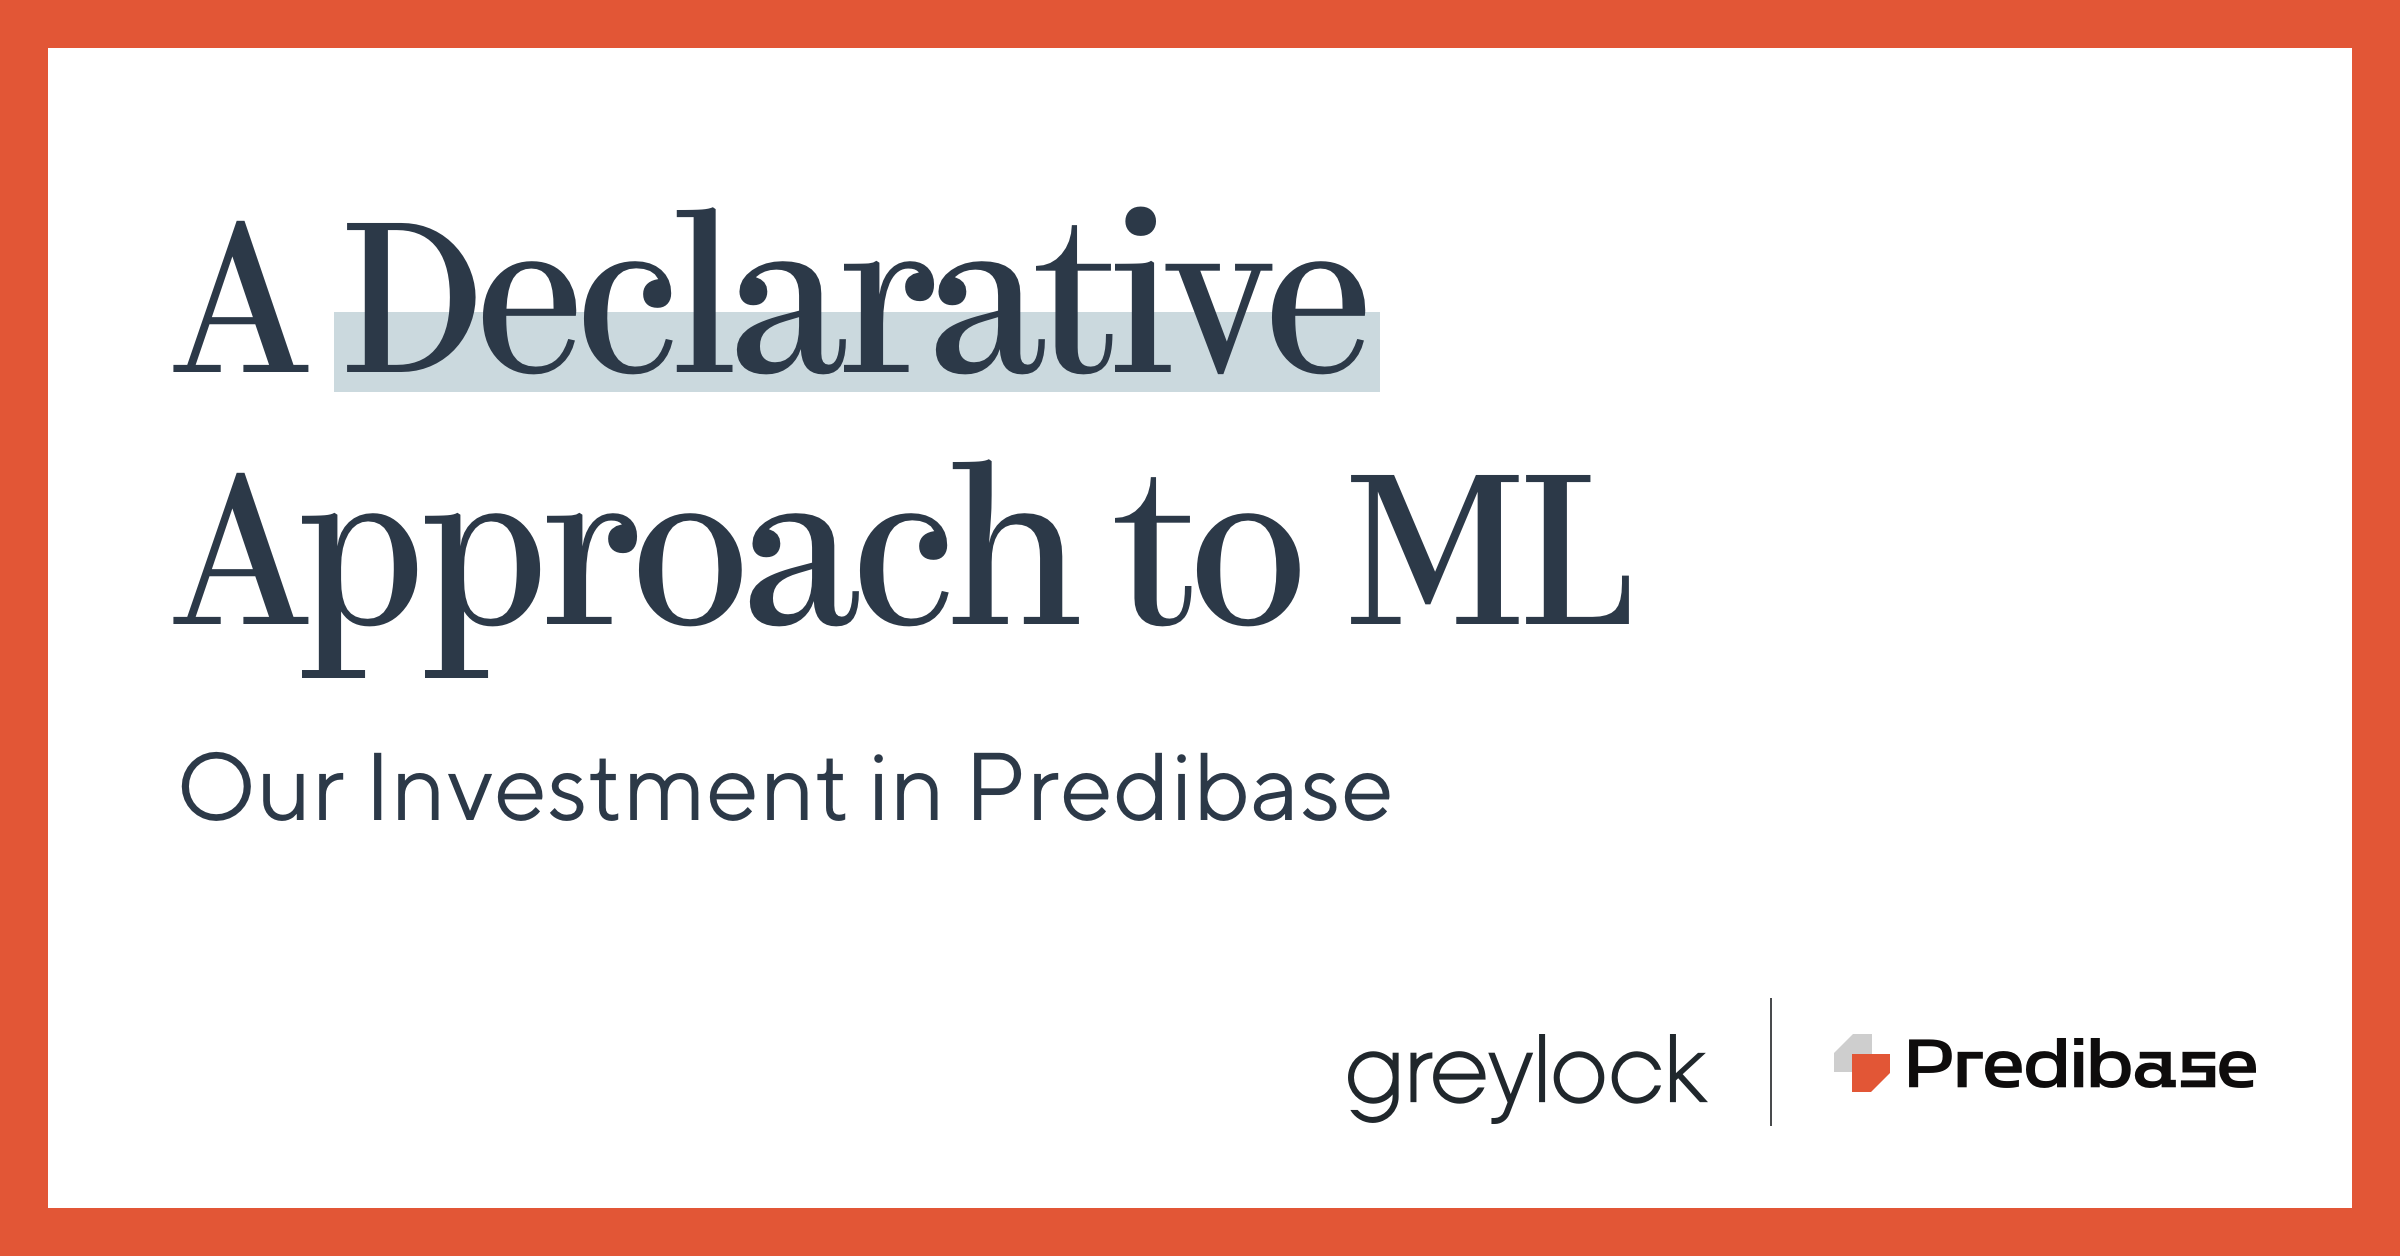 A Declarative Approach to ML